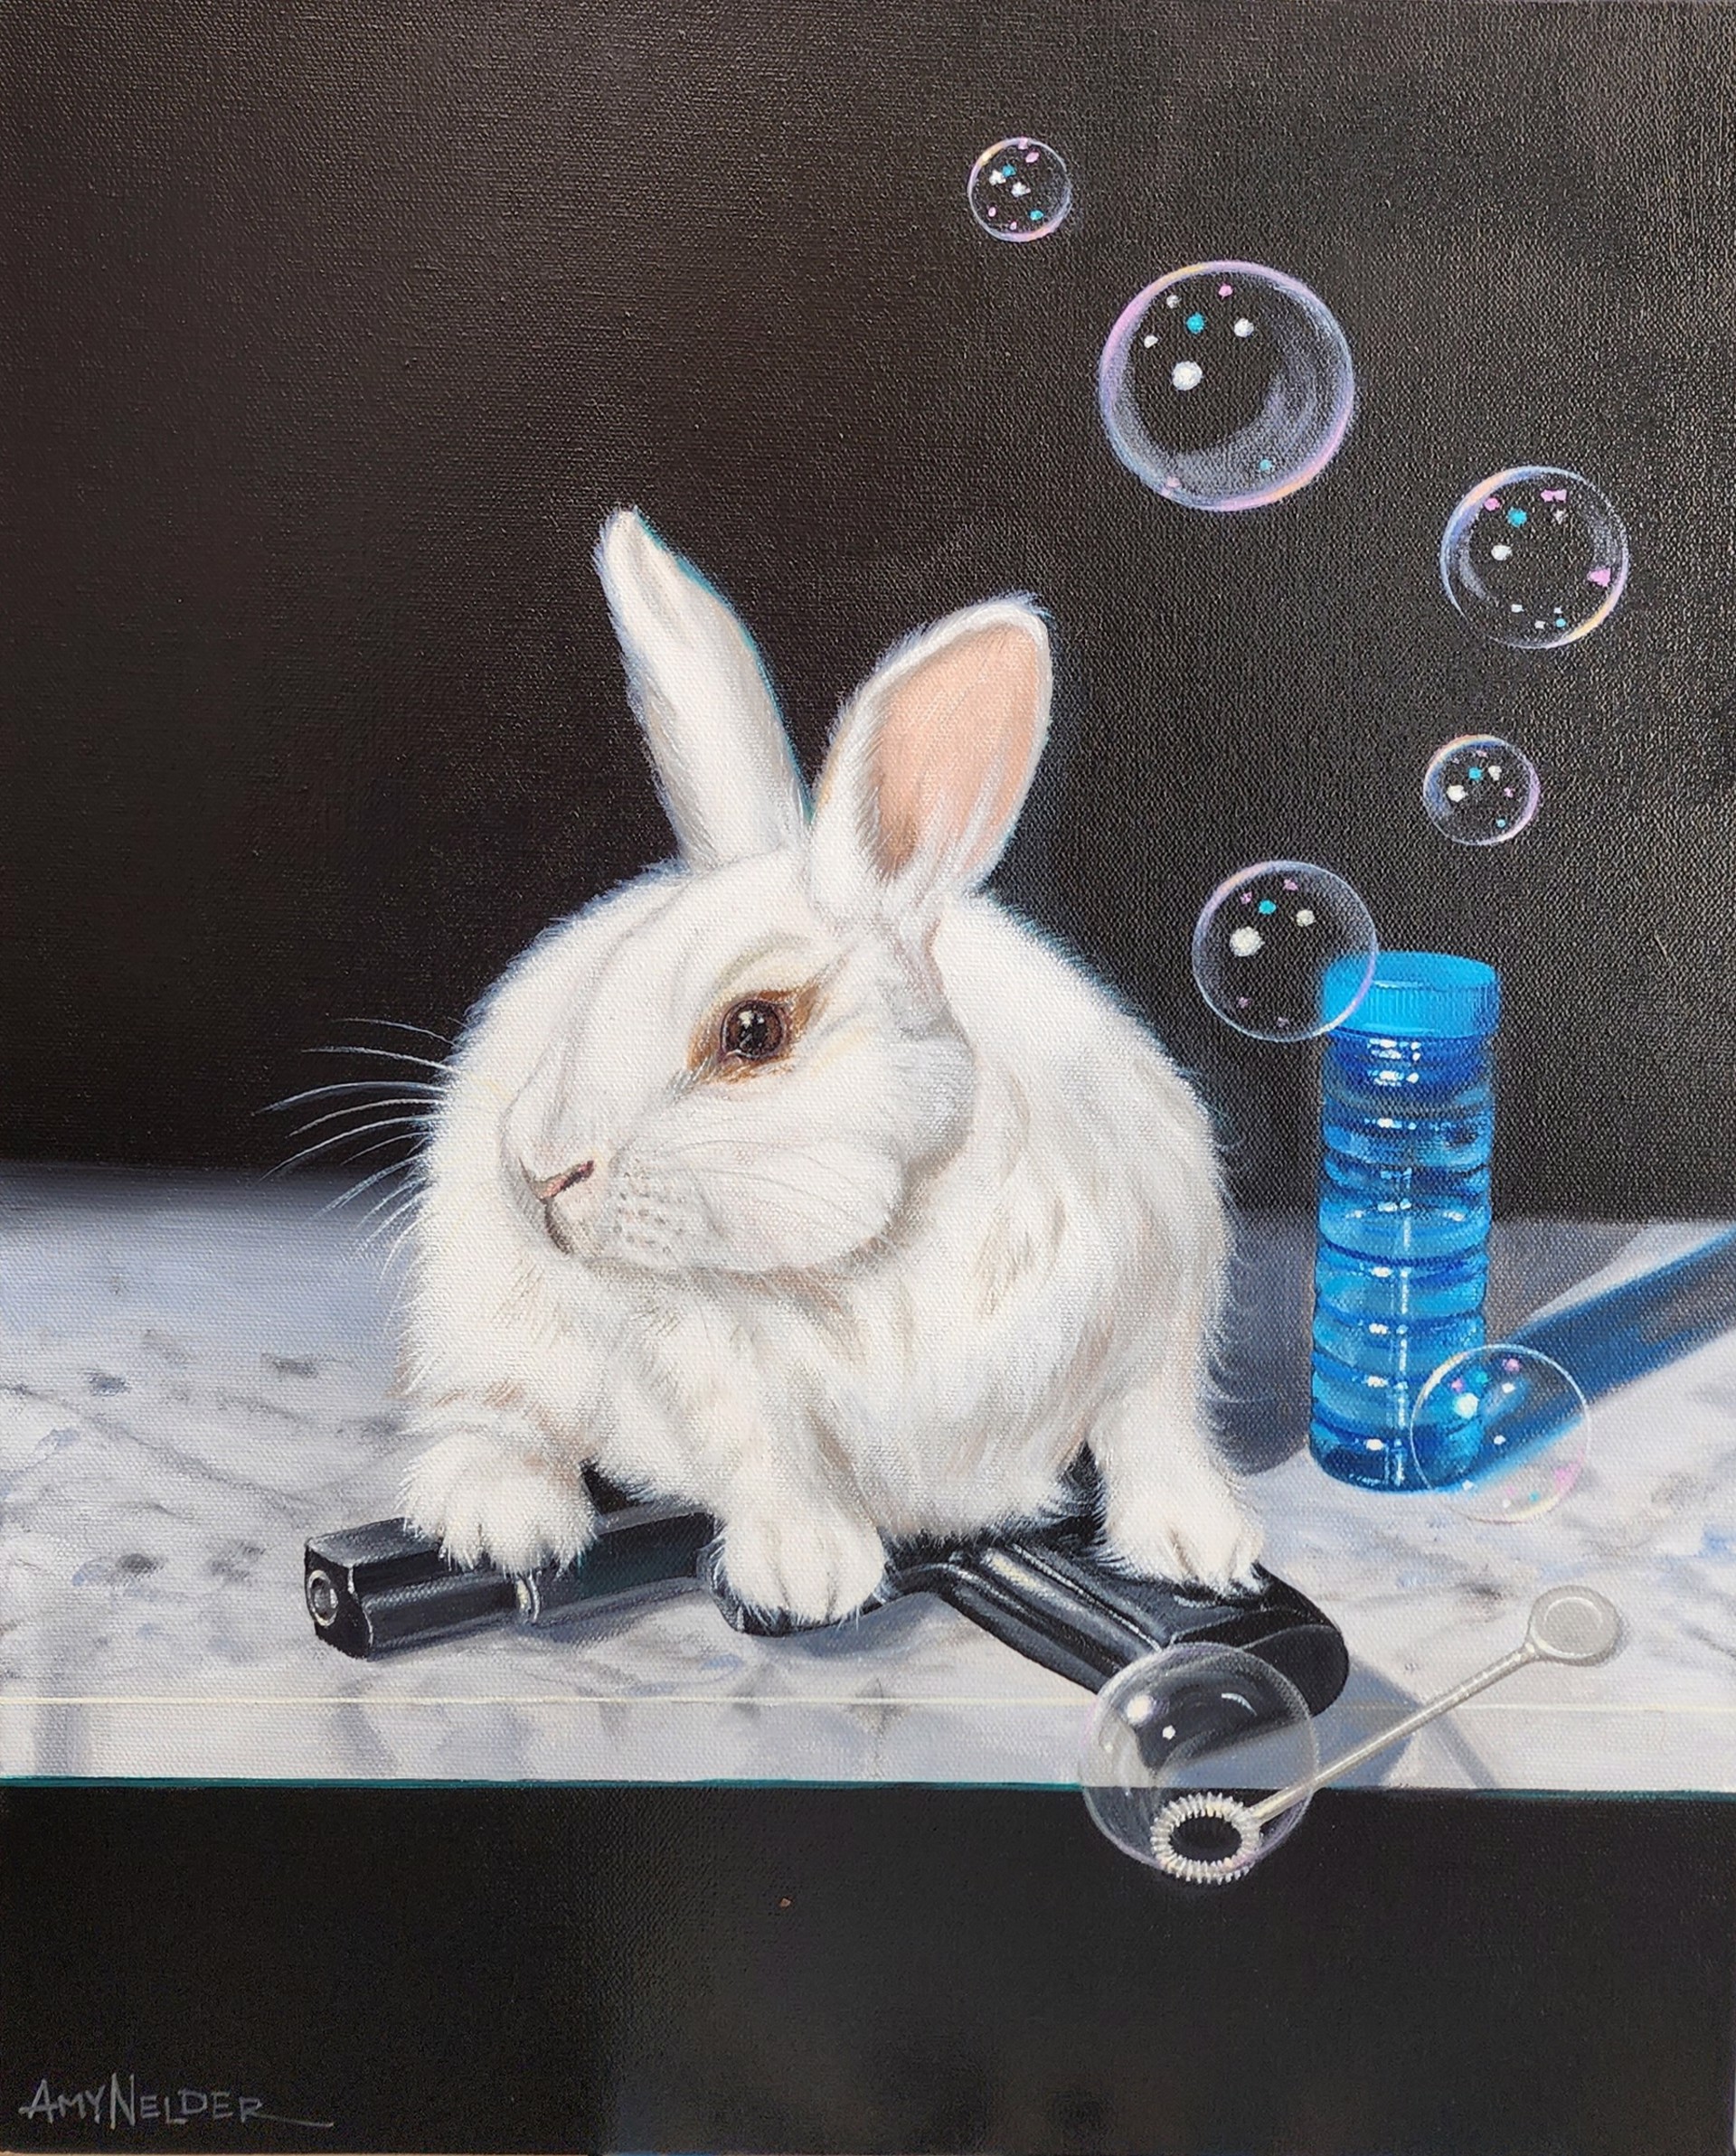 Bunnies and Guns #6 (Bunnies, Bubbles, and Guns) by Amy Nelder